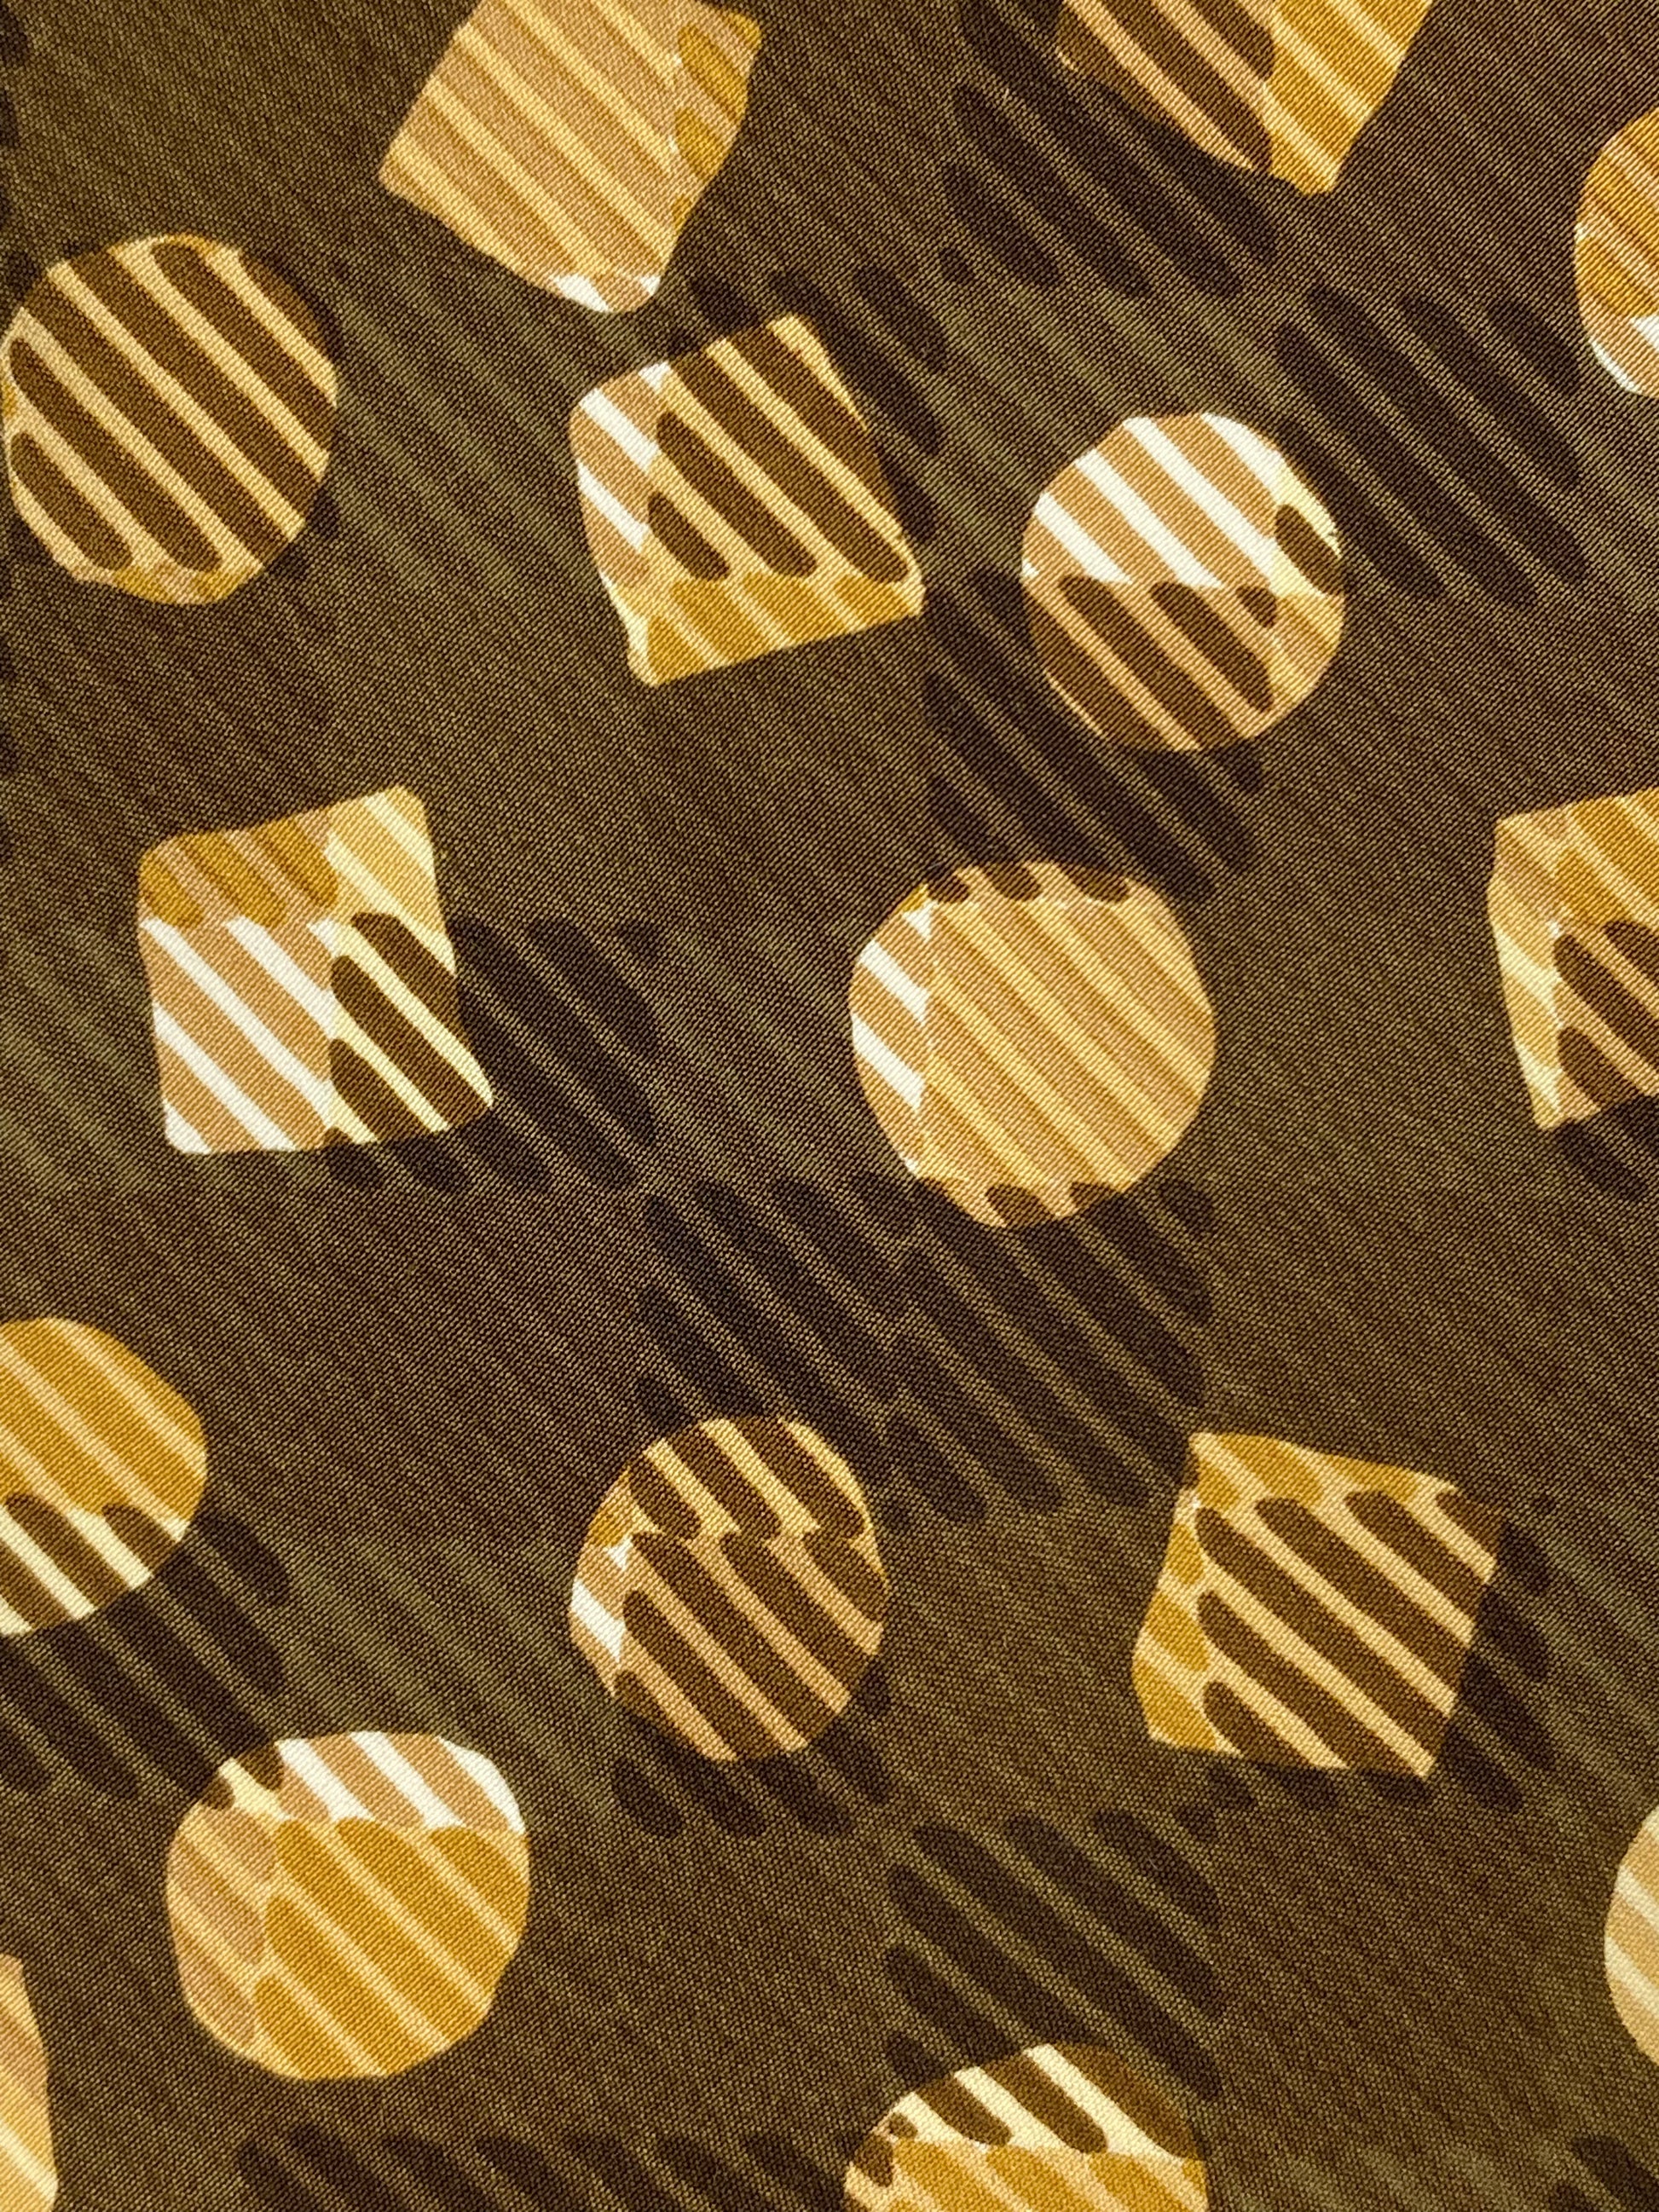 Close-up of: 90s Deadstock Silk Necktie, Men's Vintage Brown Circles & Squares Check Pattern Tie, NOS